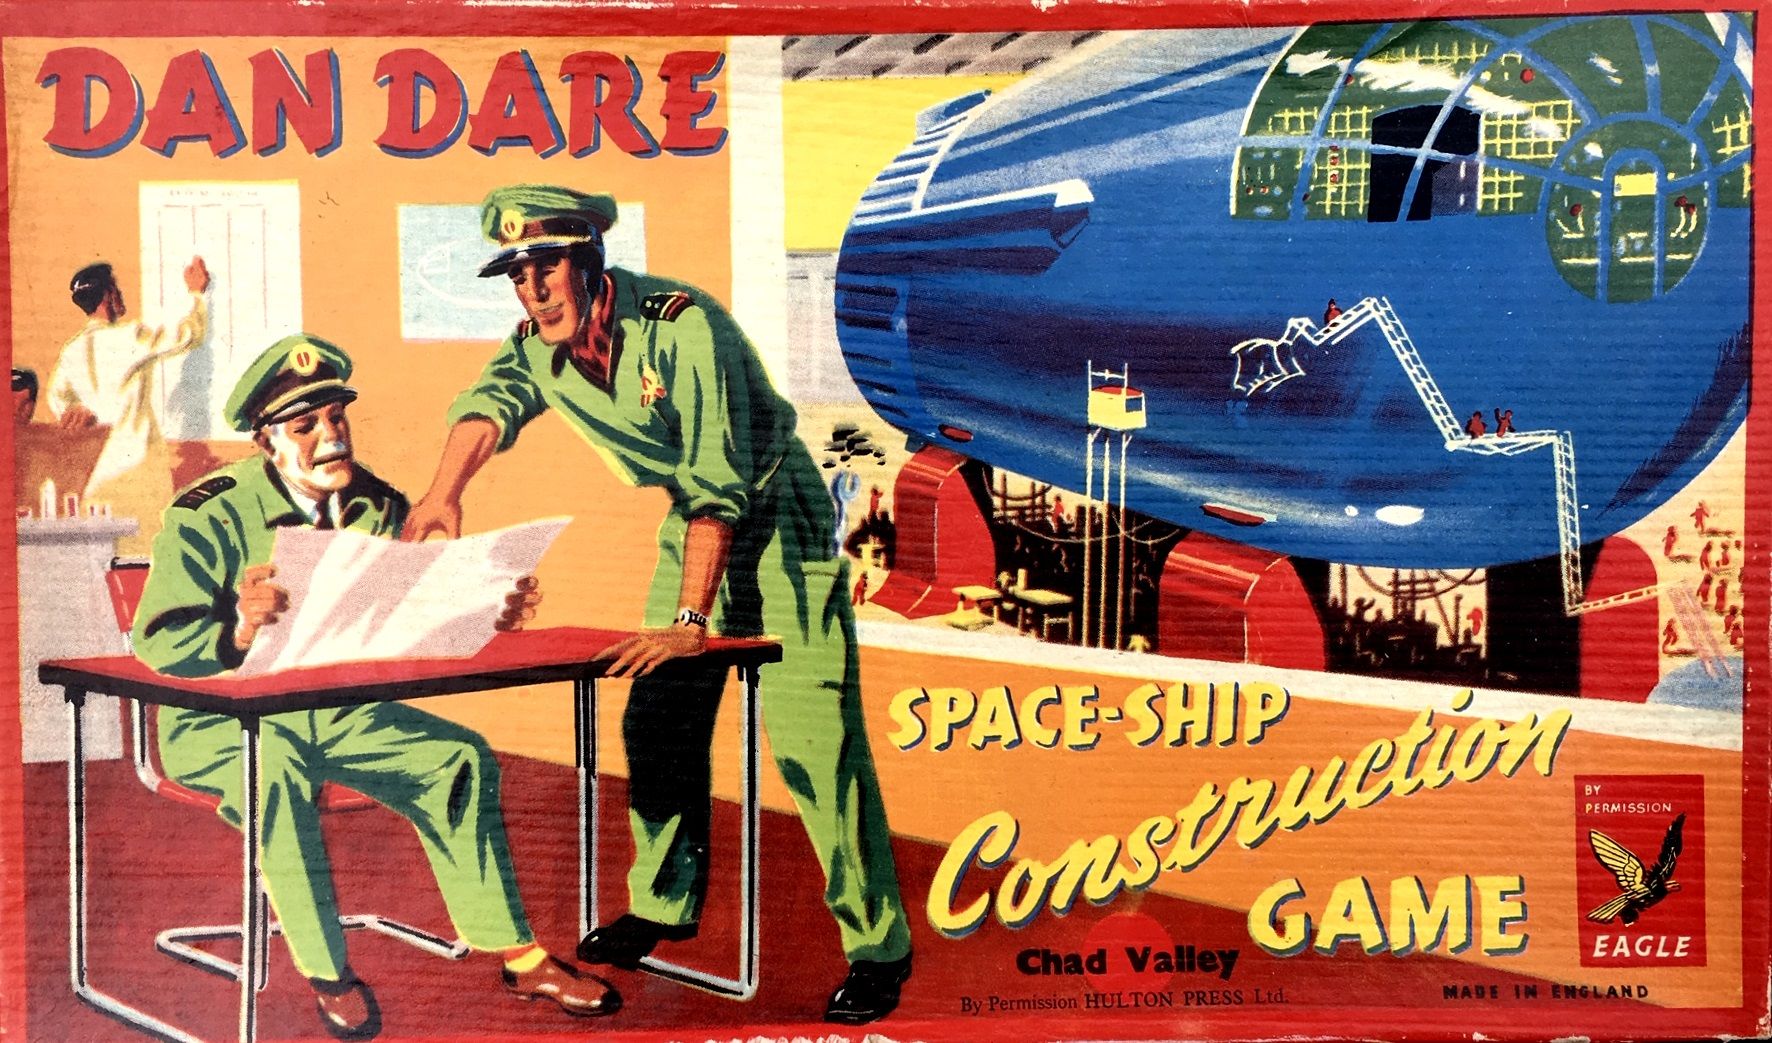 Dan Dare Space-Ship Construction Game